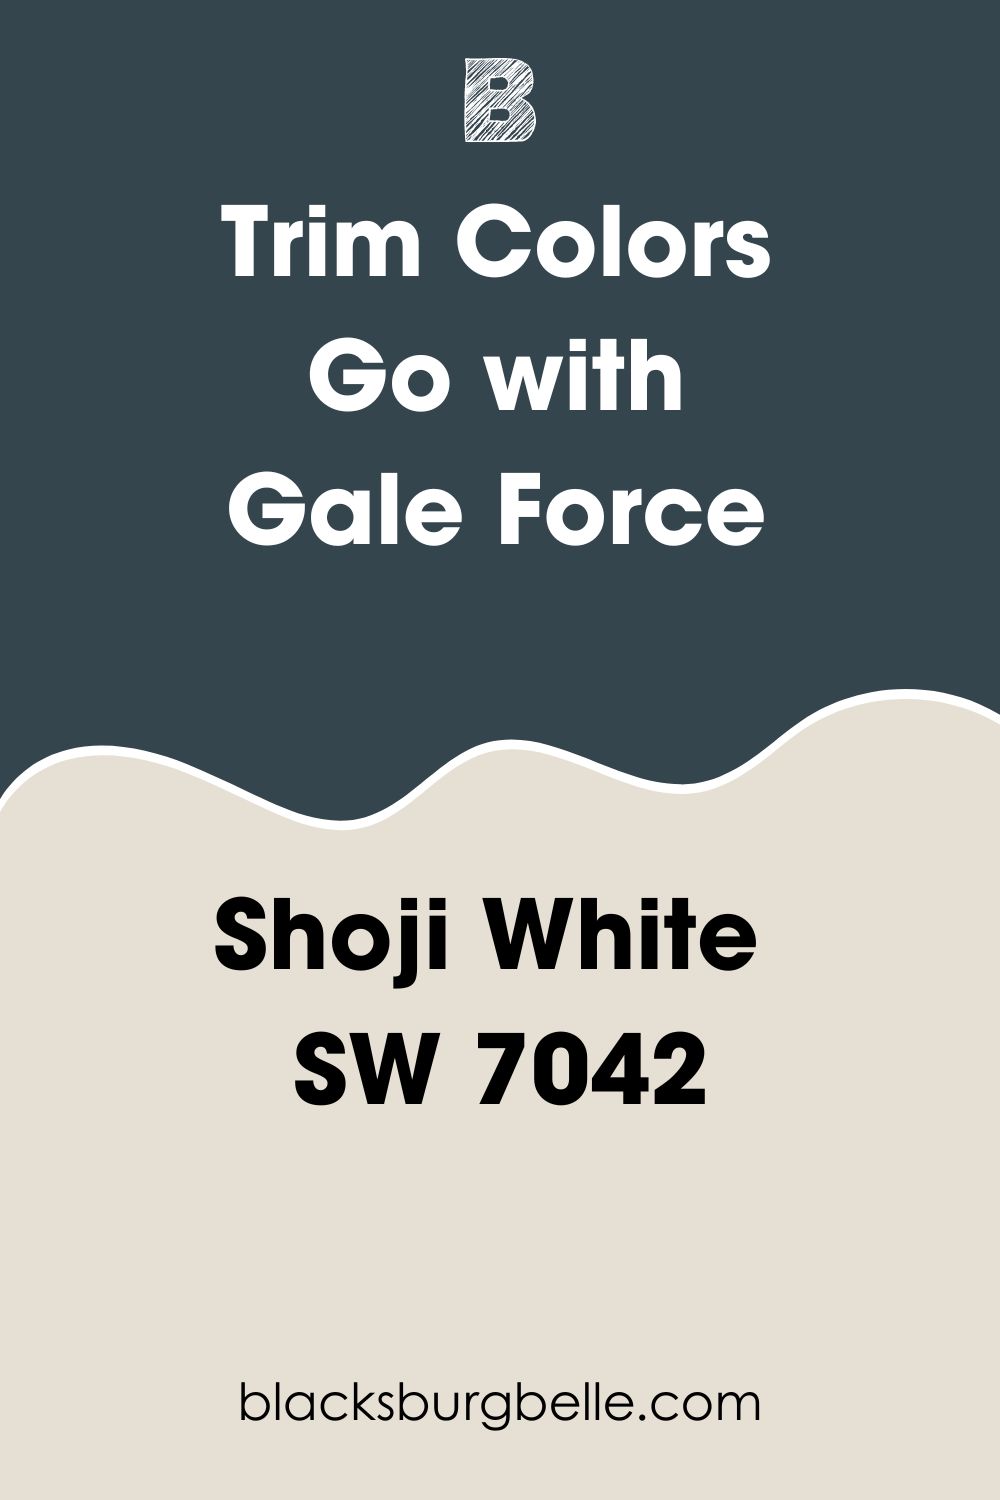 Sherwin Williams Shoji White Go with Sherwin Williams Gale Force